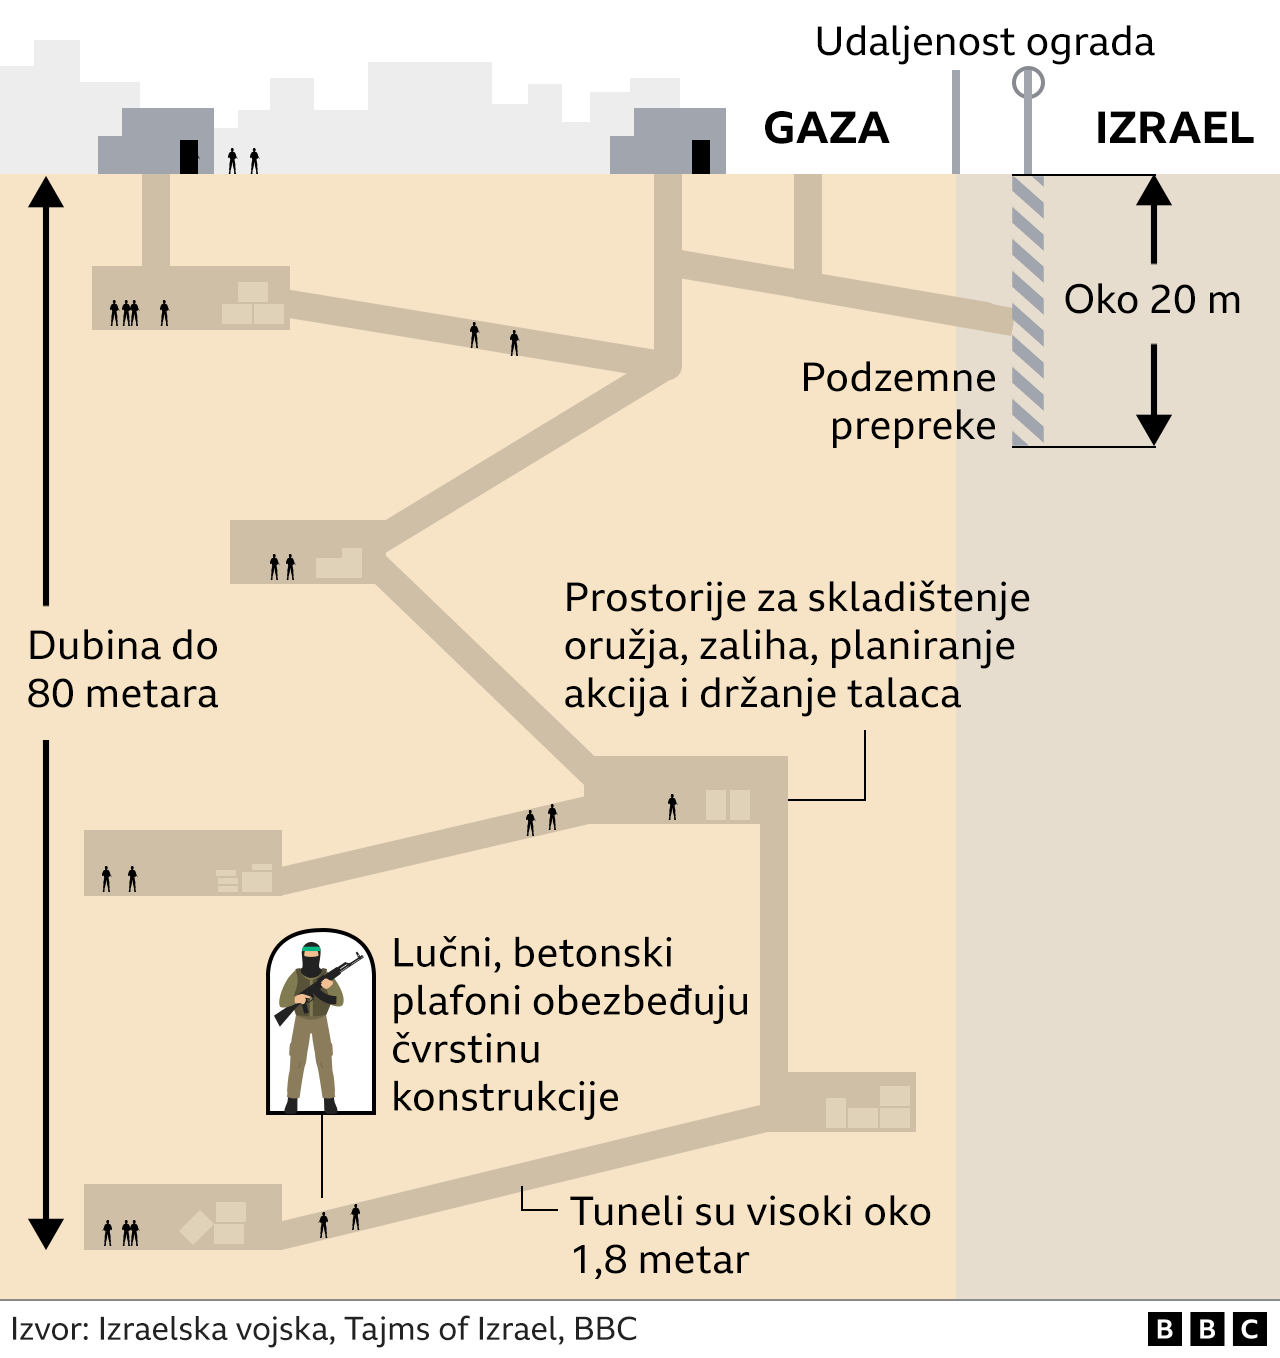 Hamas, Hamasovi tuneli, tuneli ispod Gaze